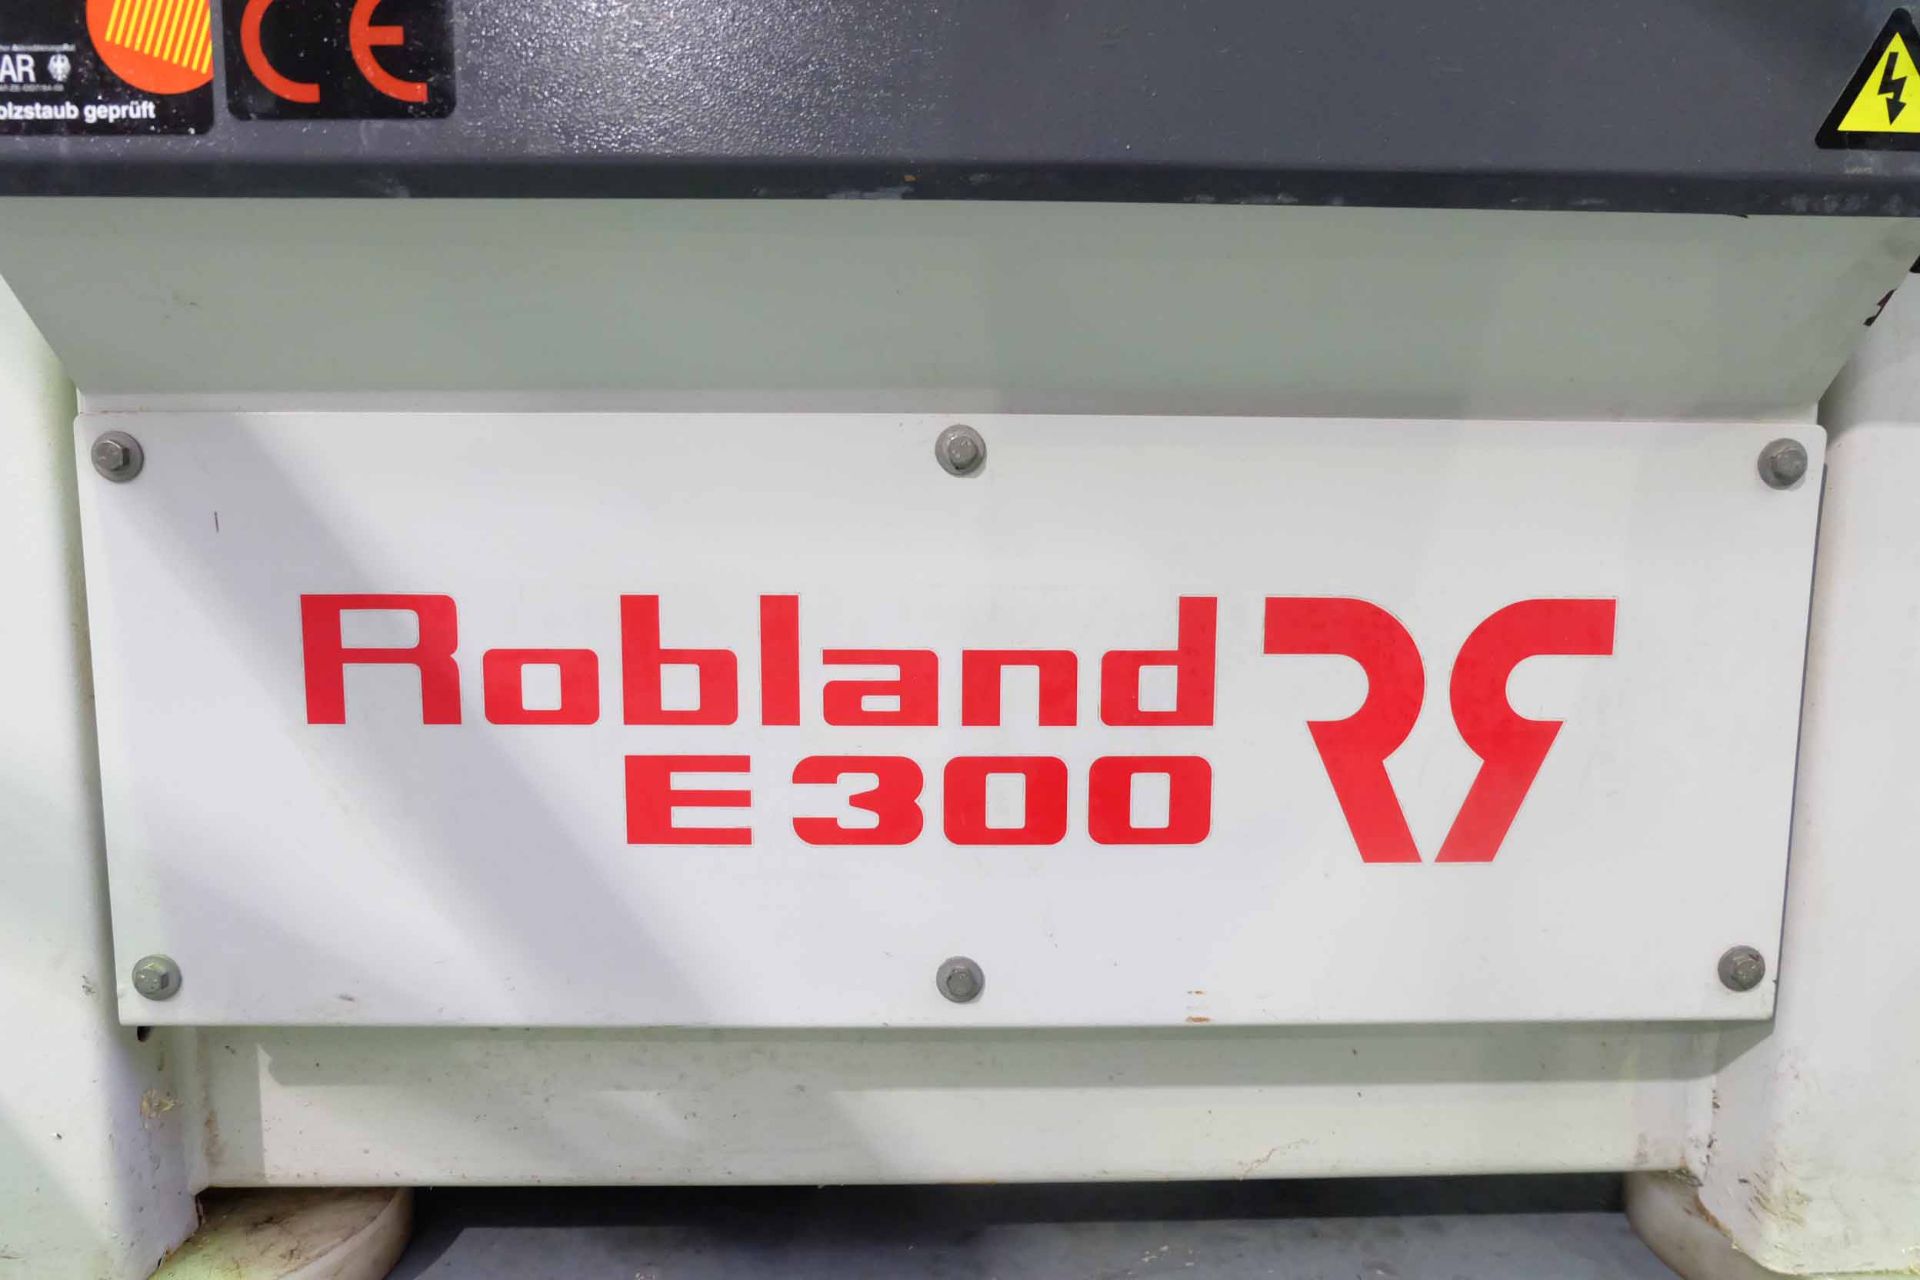 Robland E300 Board Saw. Min Blade Diameter 250mm. Max Blade Diameter 300mm. Capacity 1700mm x 2500mm - Bild 13 aus 21